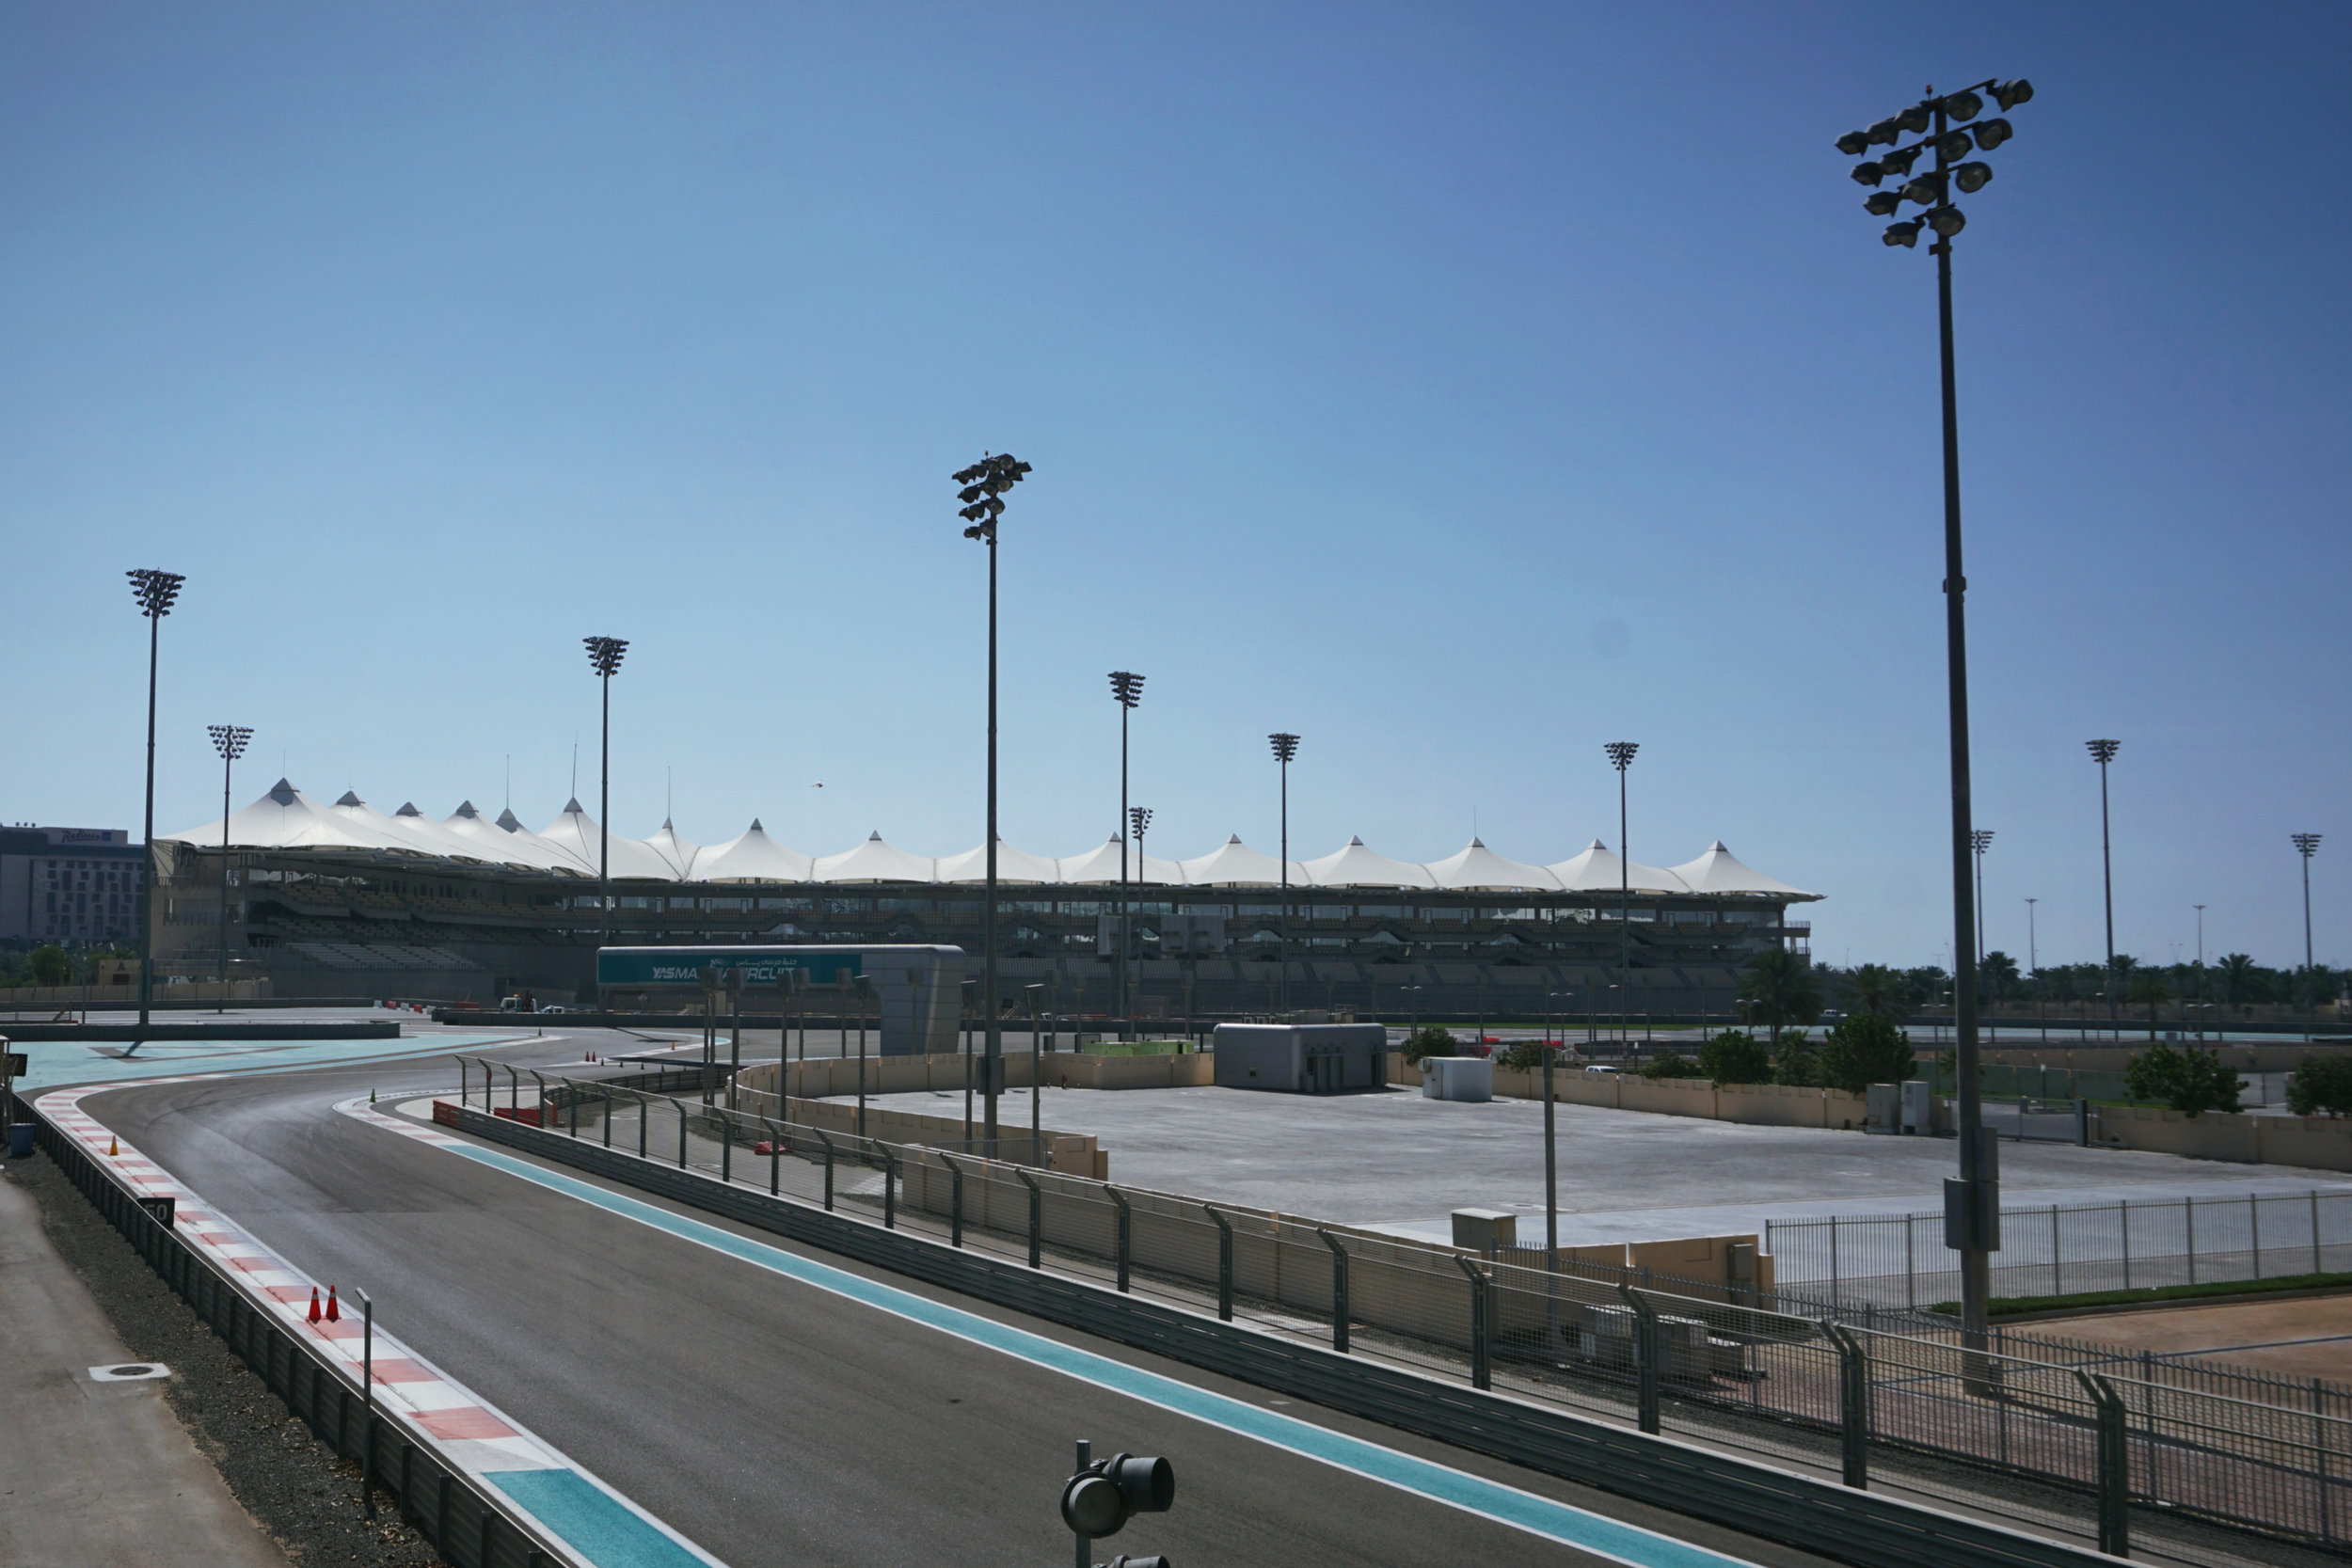 UAE_Abu Dhabi_travel_Yas Marina Circuit Formula 1 track.jpg